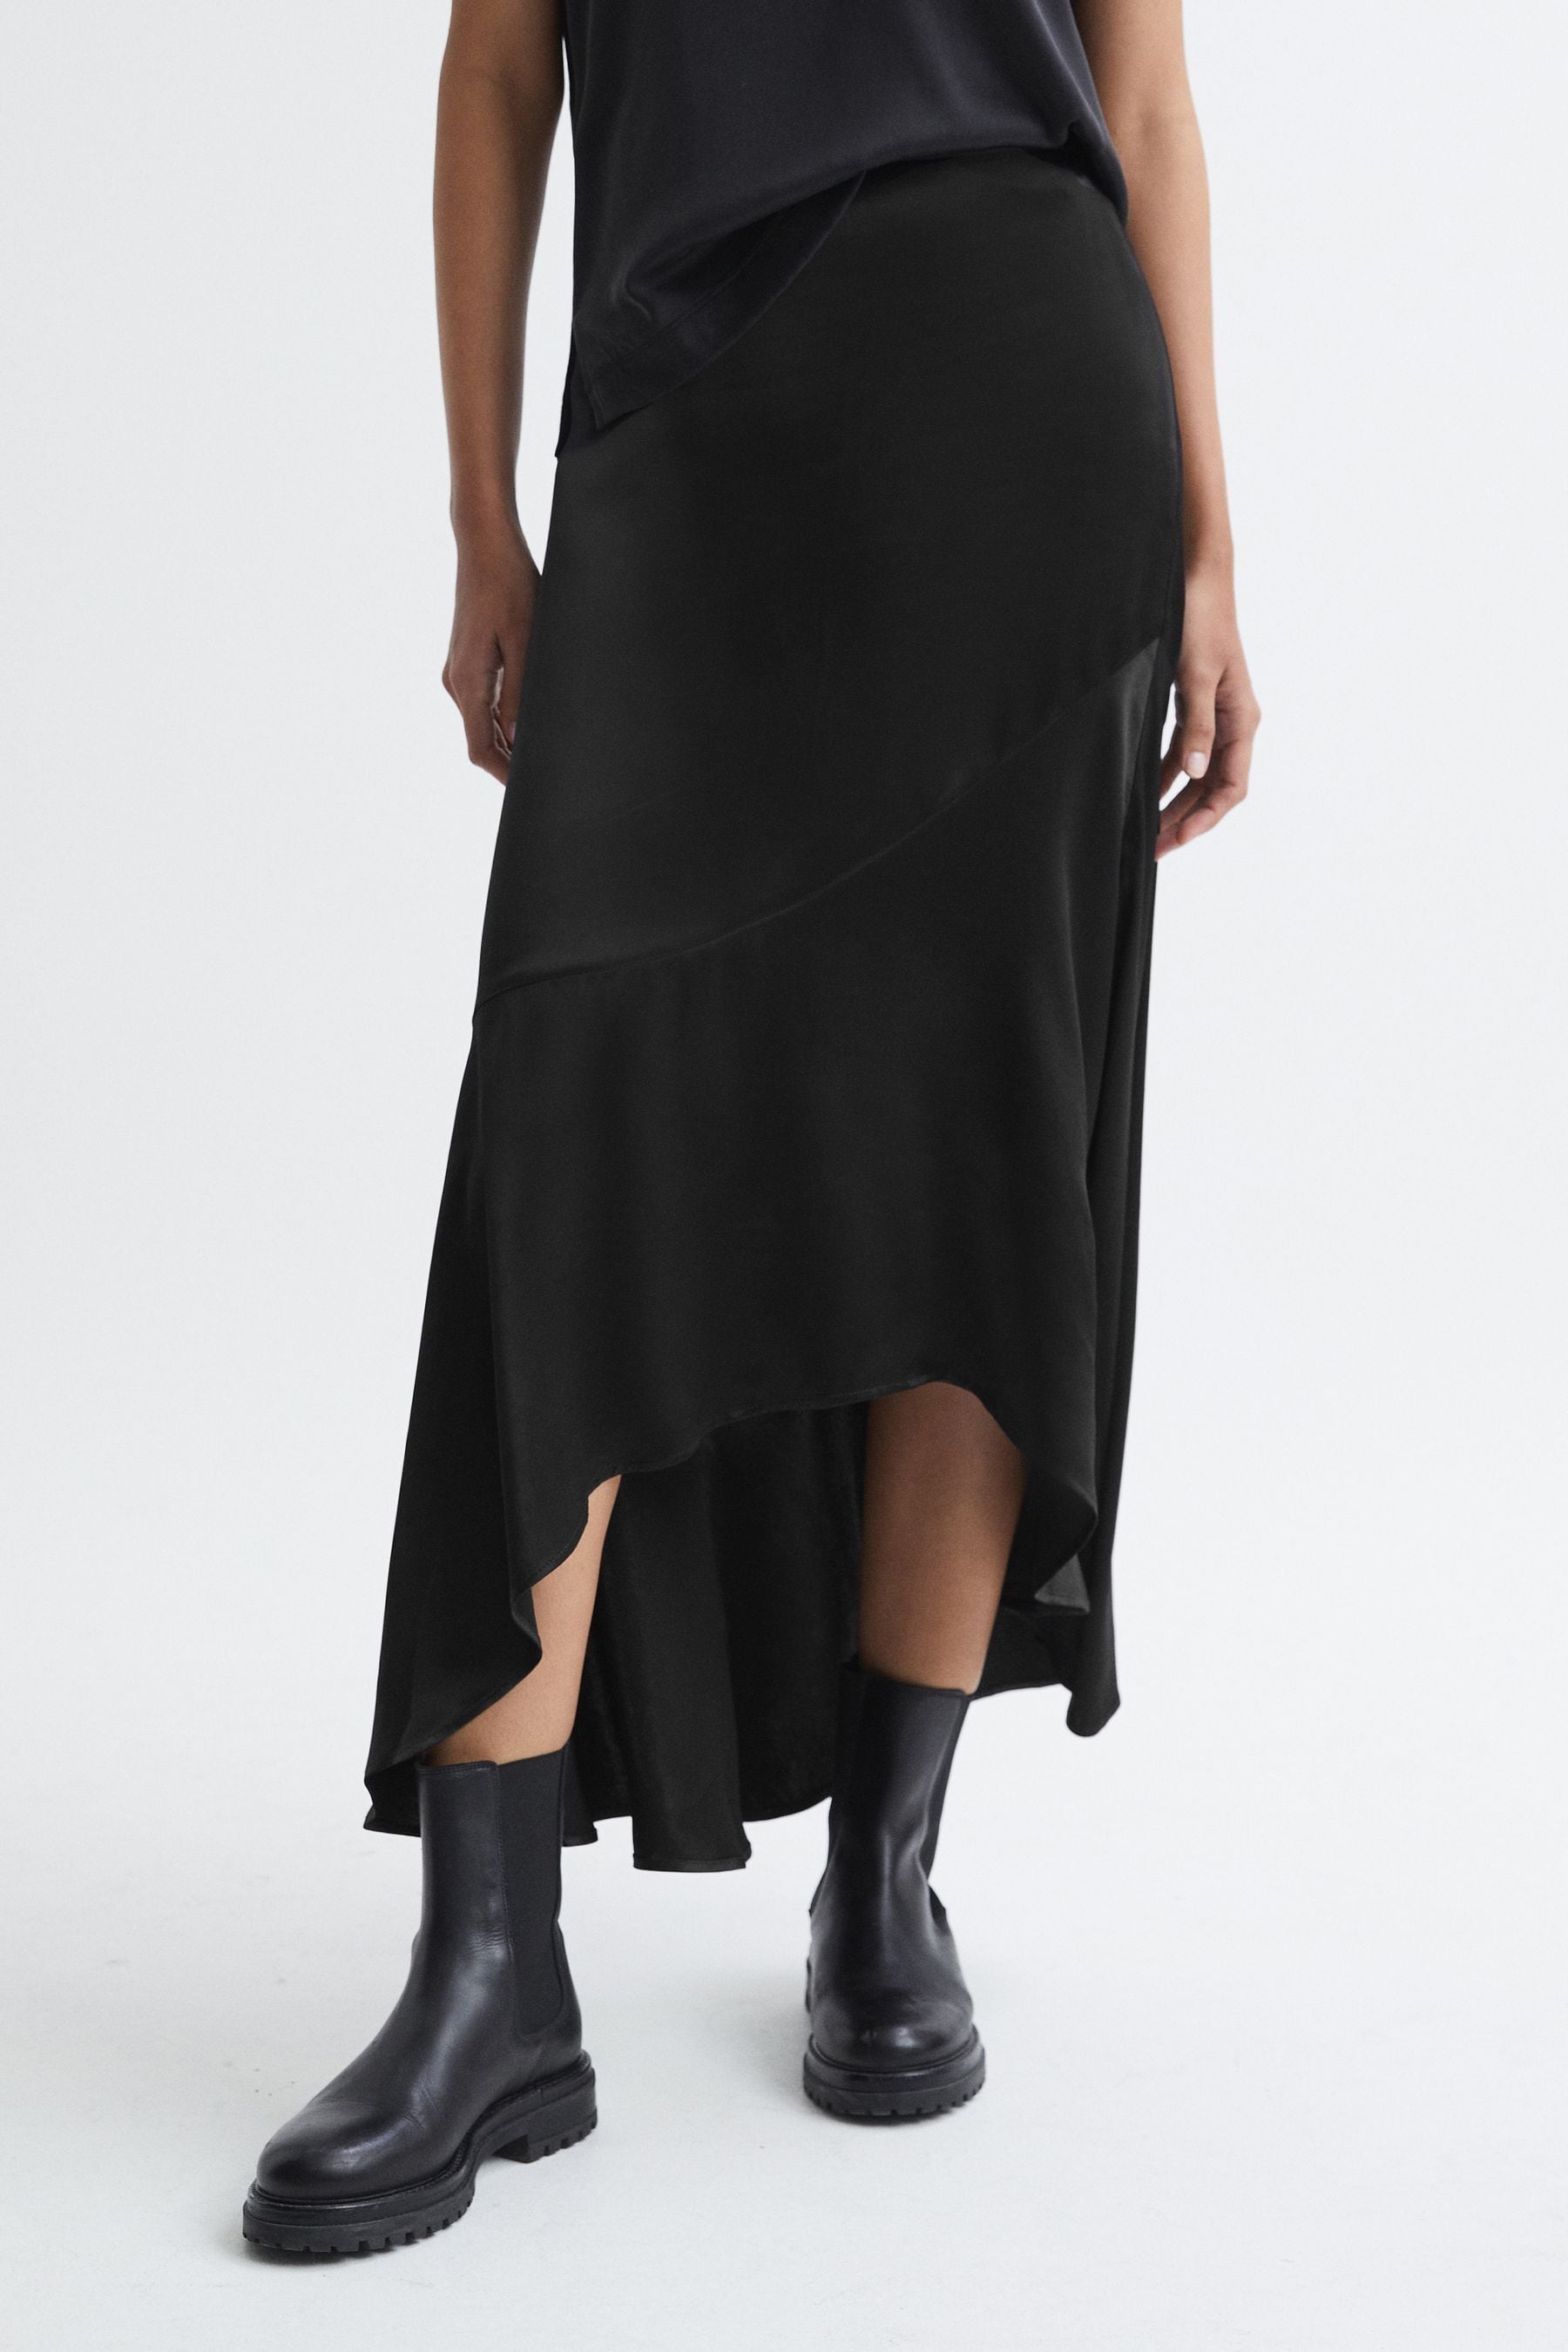 Reiss Inga - Black Satin High Rise Midi Skirt, Us 4